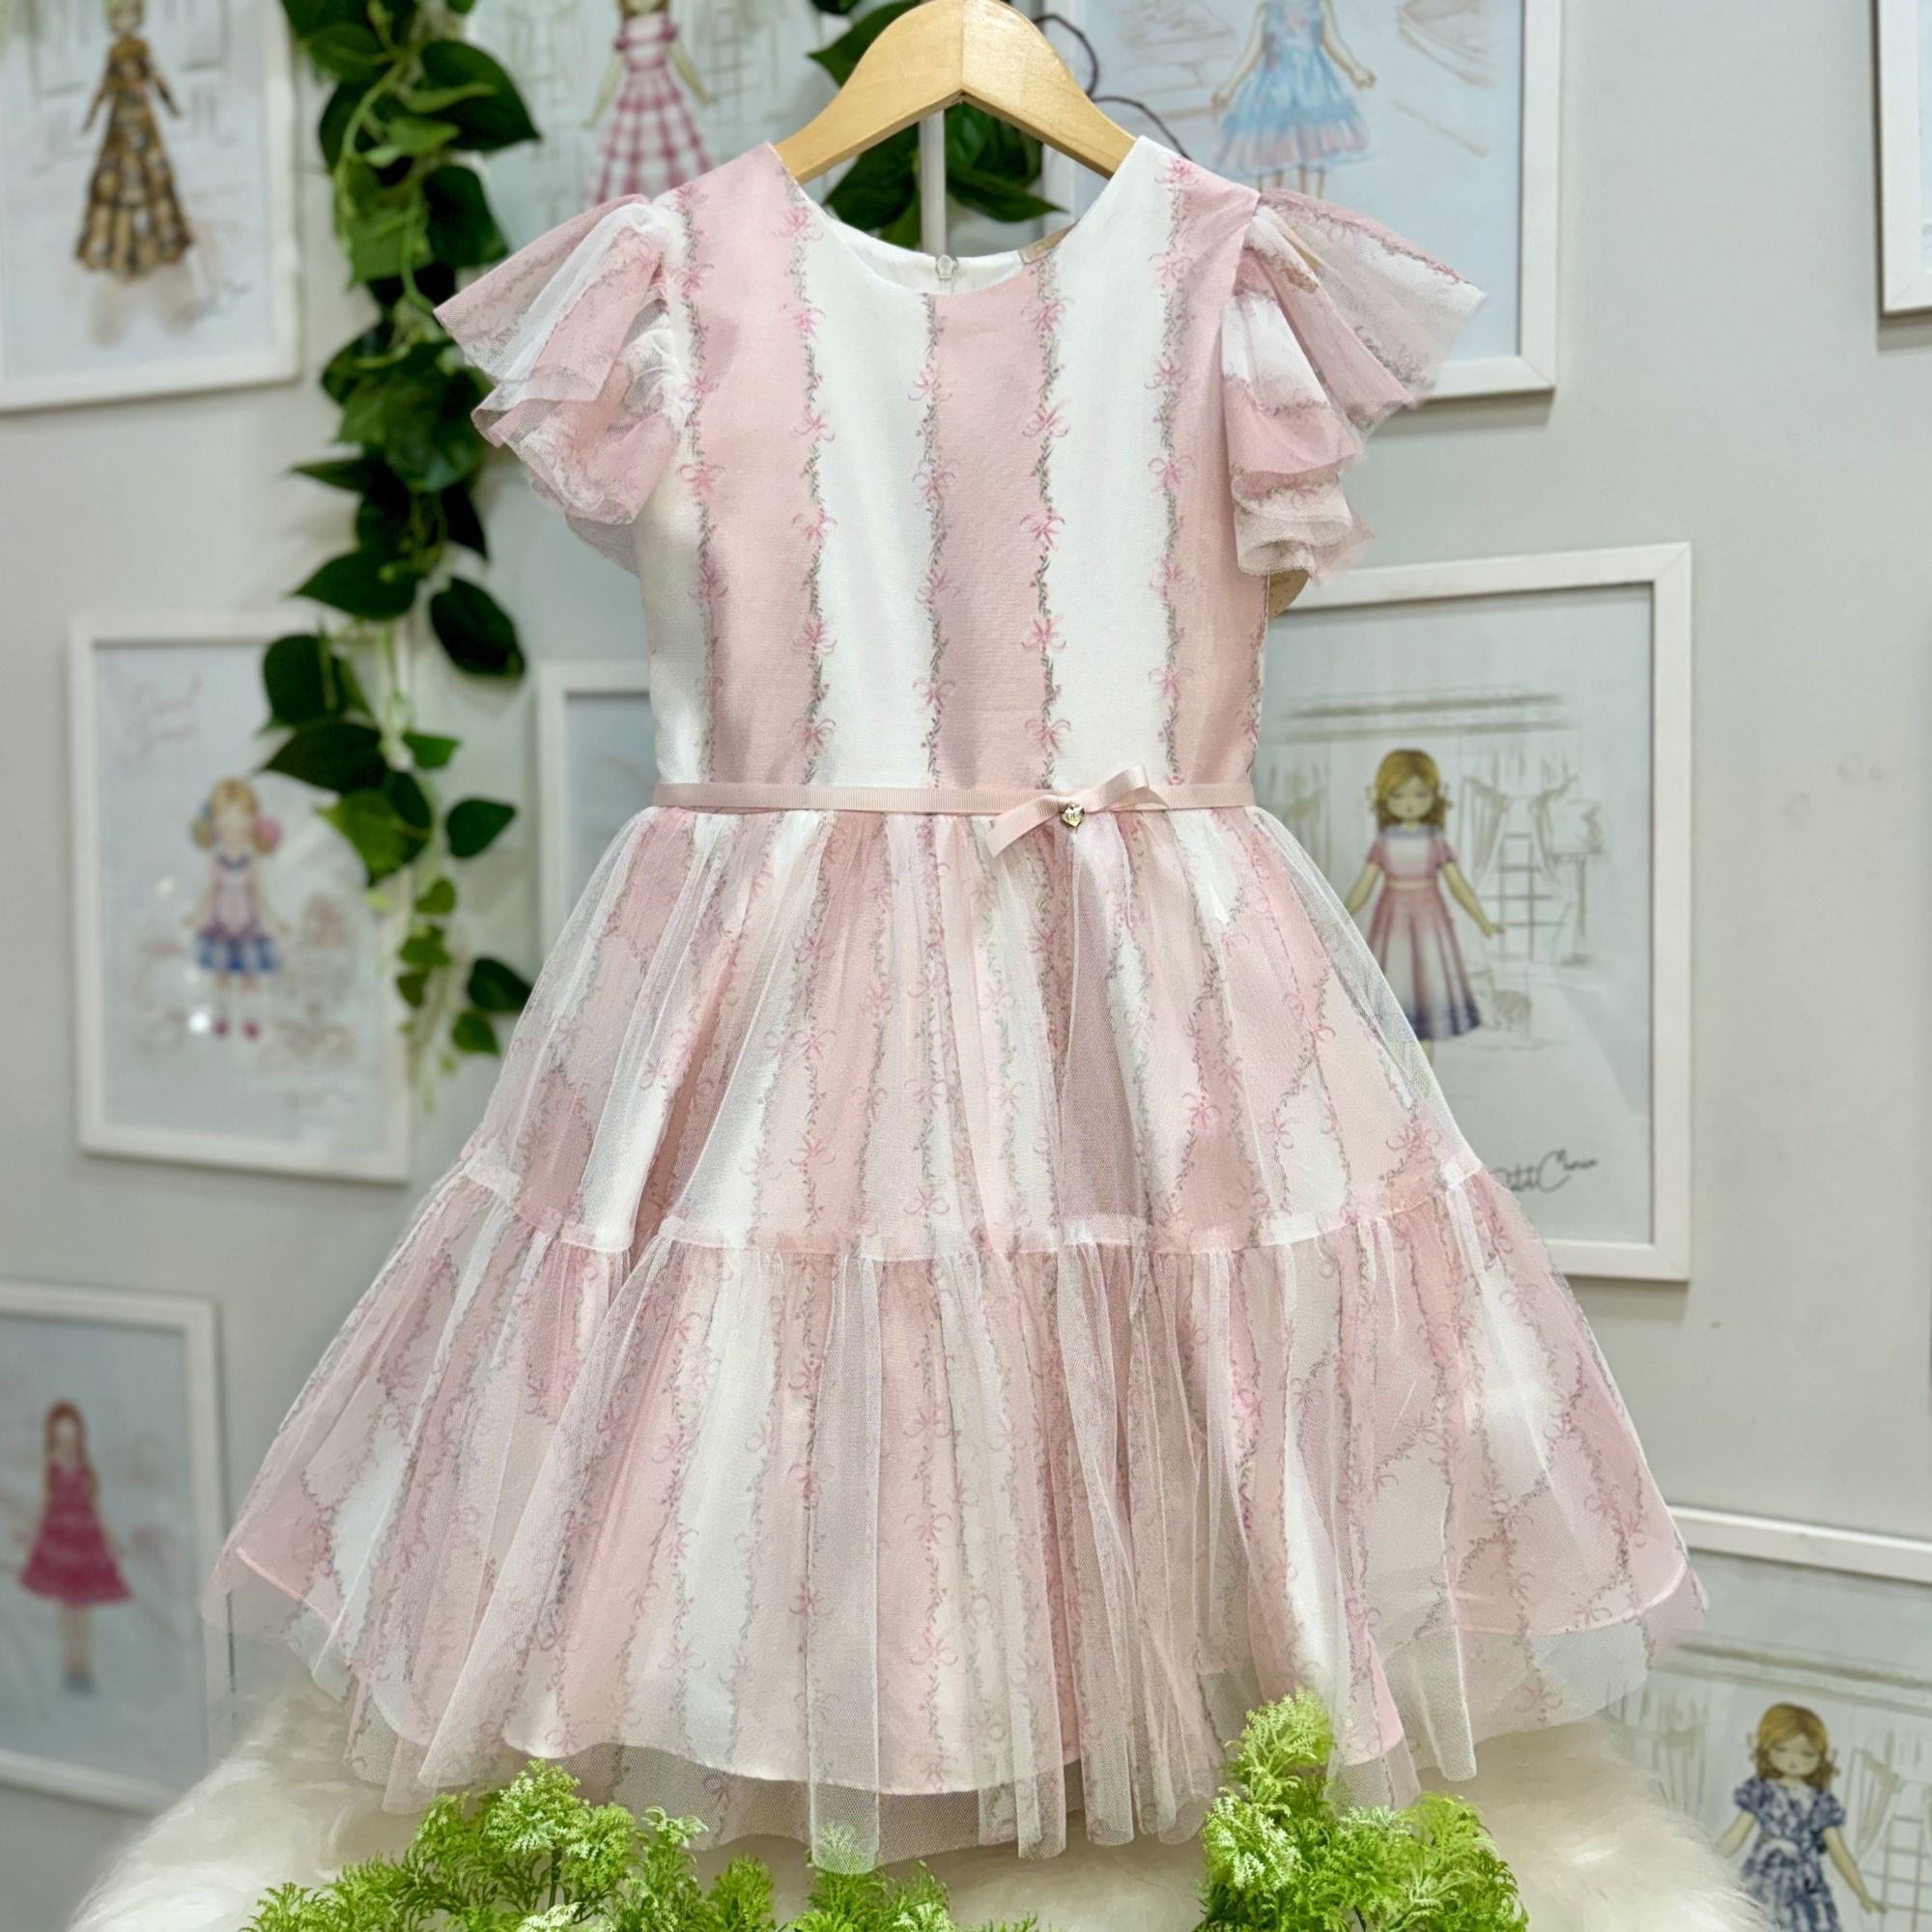 Vestido Infantil de Festa Petit Cherie Rosa Claro Sobrep. Tule Floral Listrado Manga Babado